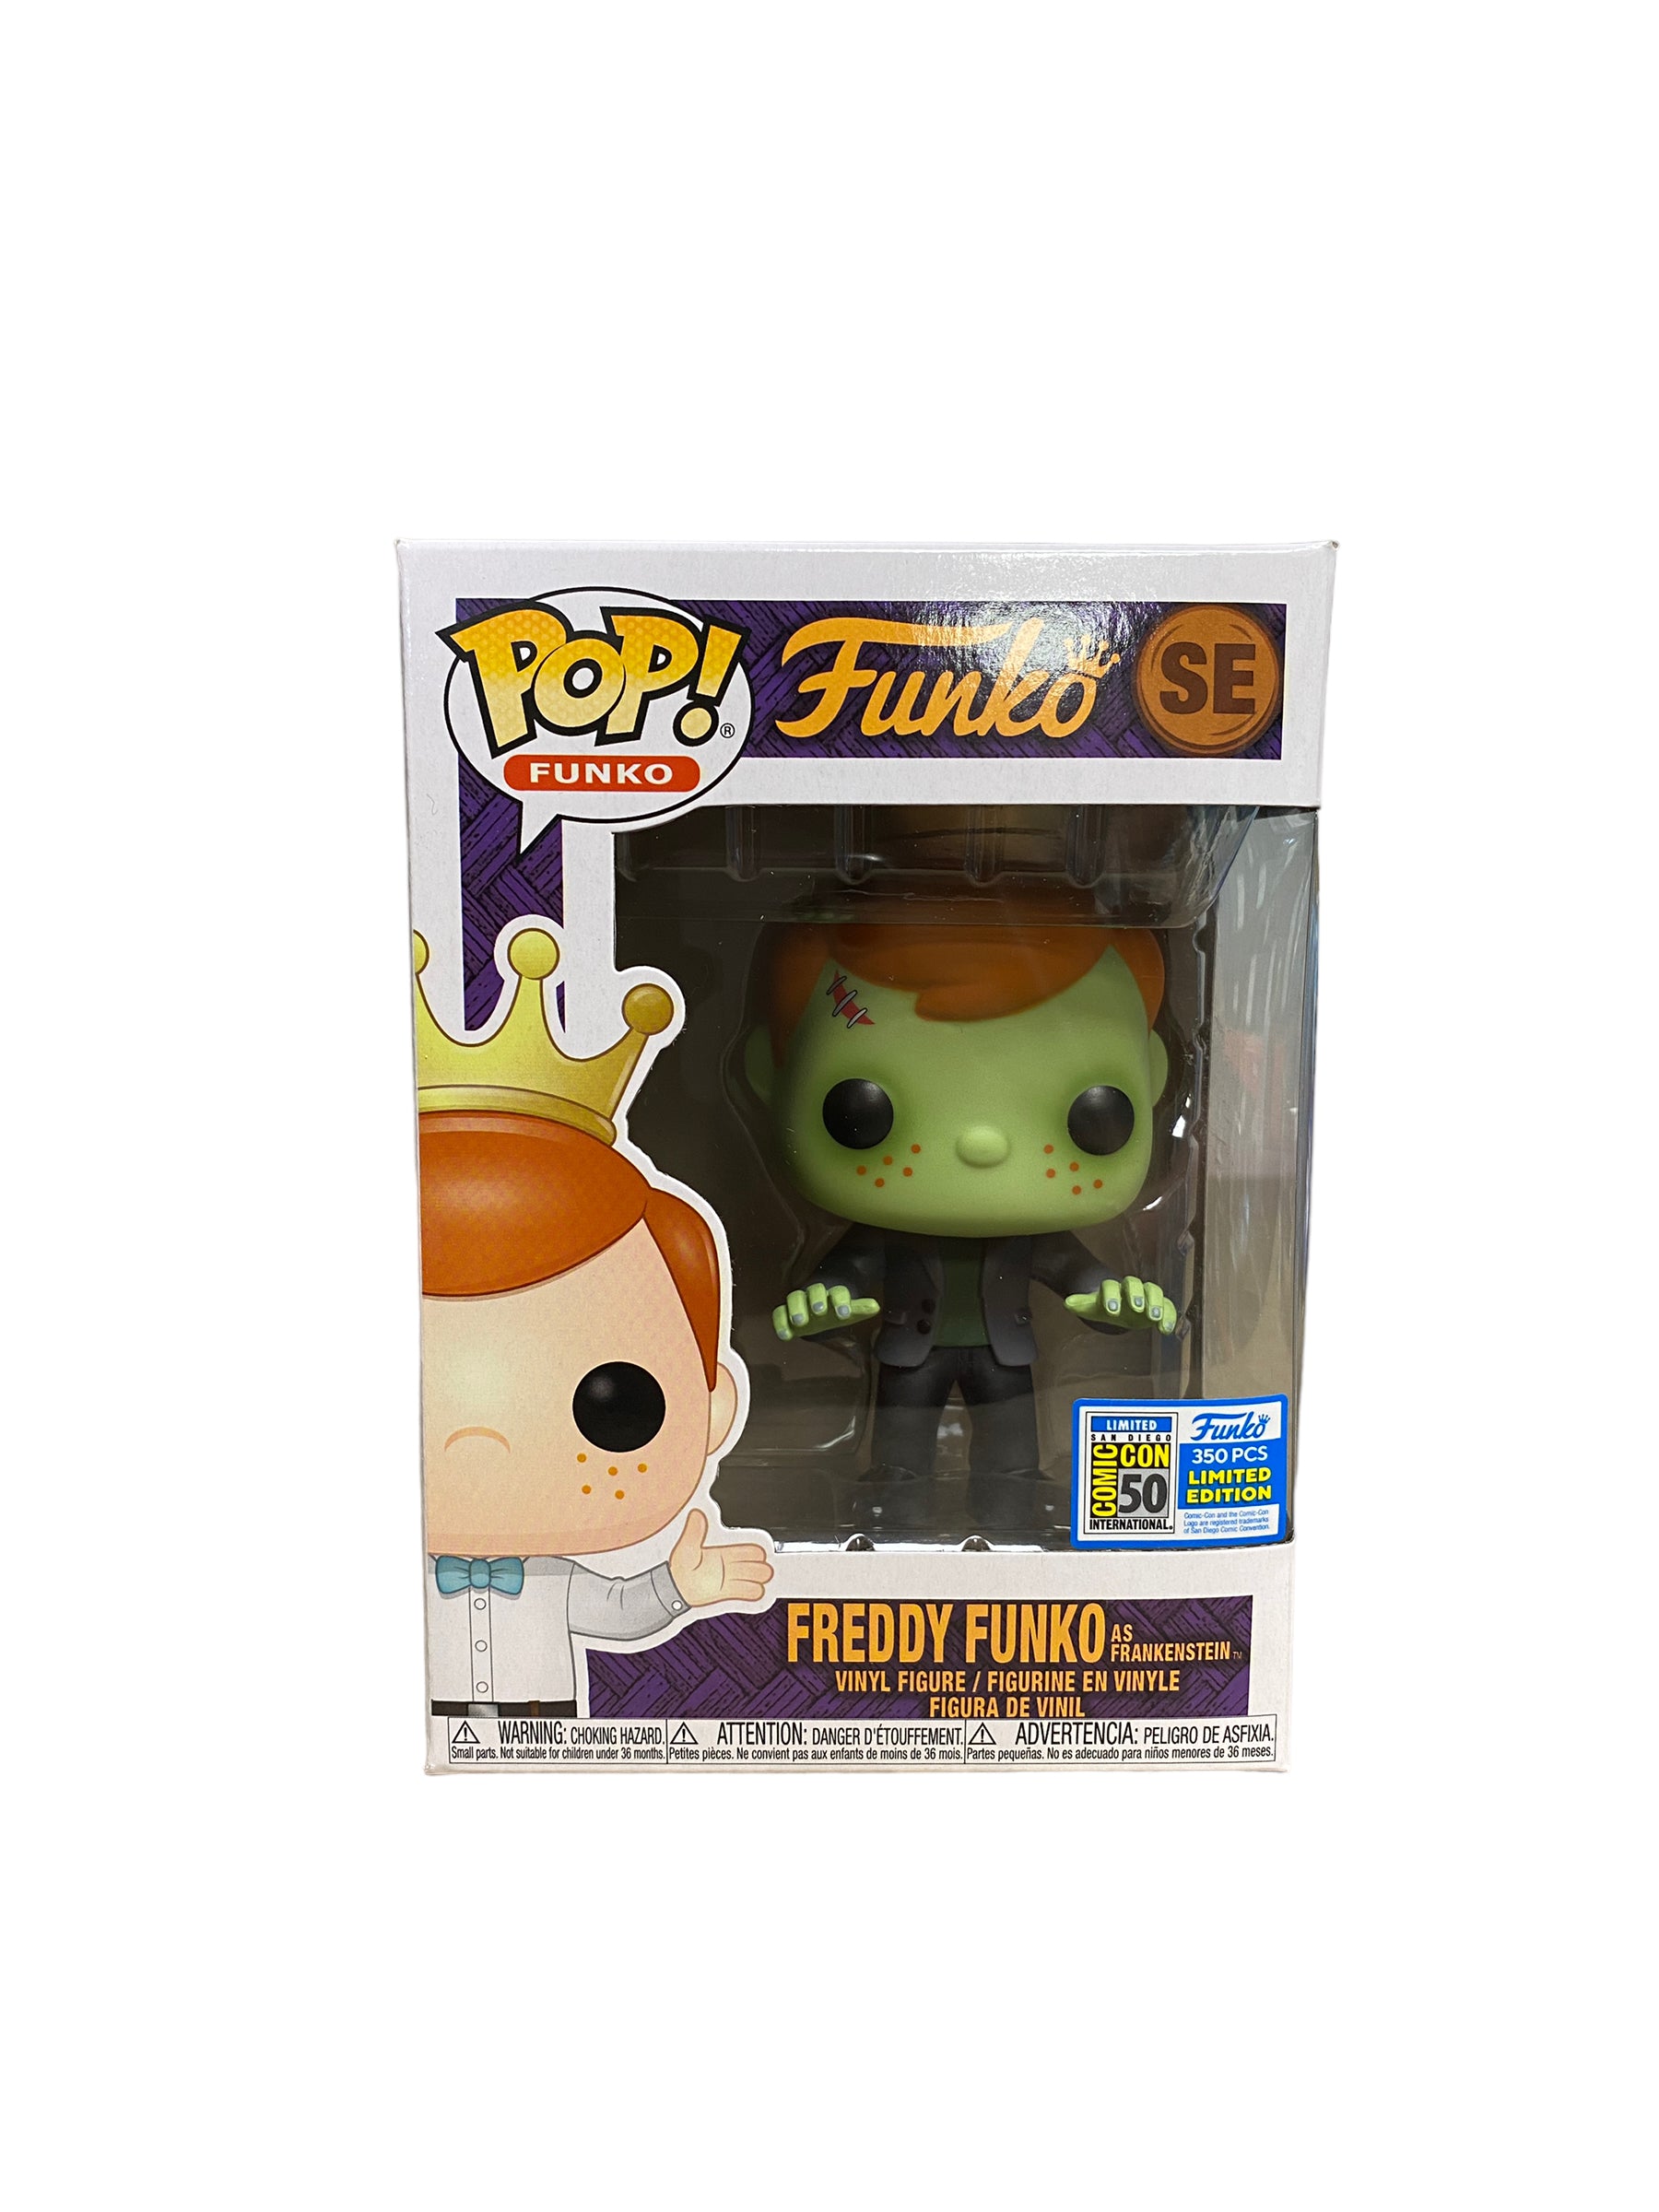 Freddy Funko as Frankenstein (Error Head Glow) Funko Pop! - SDCC 2019 Exclusive LE350 Pcs - Condition 8.75/10